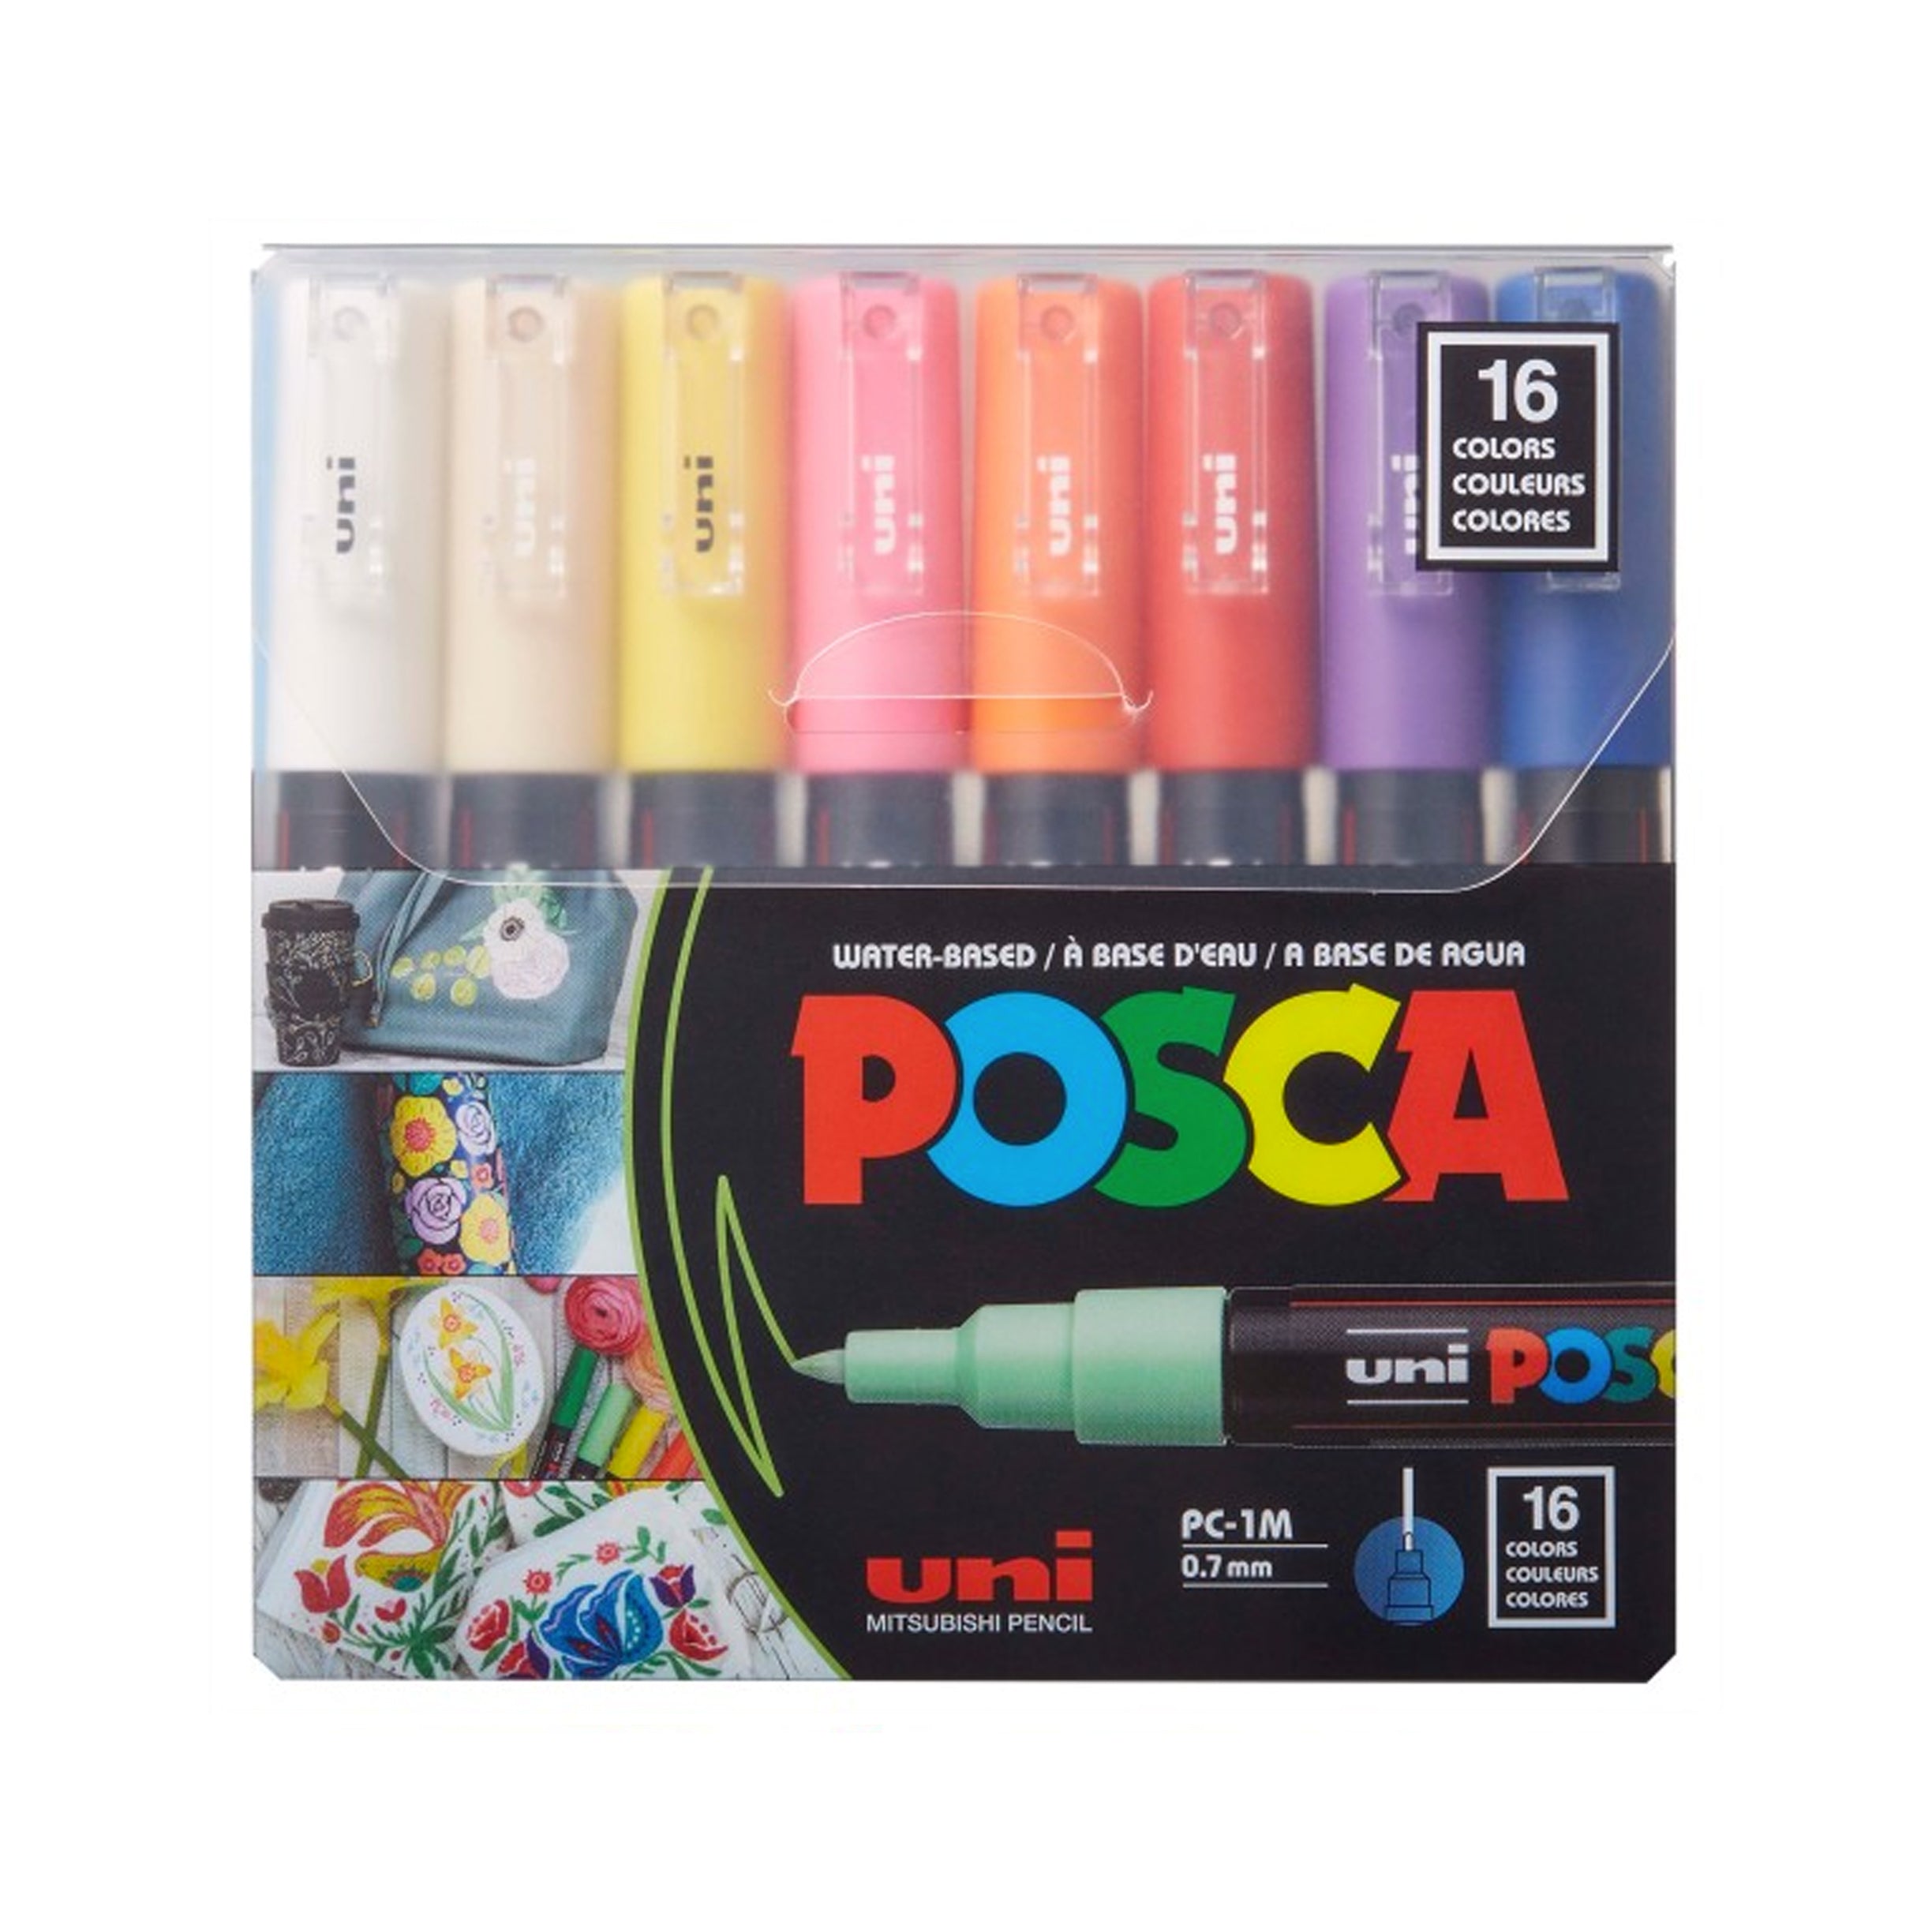 What Makes a POSCA Paint Pen So Good